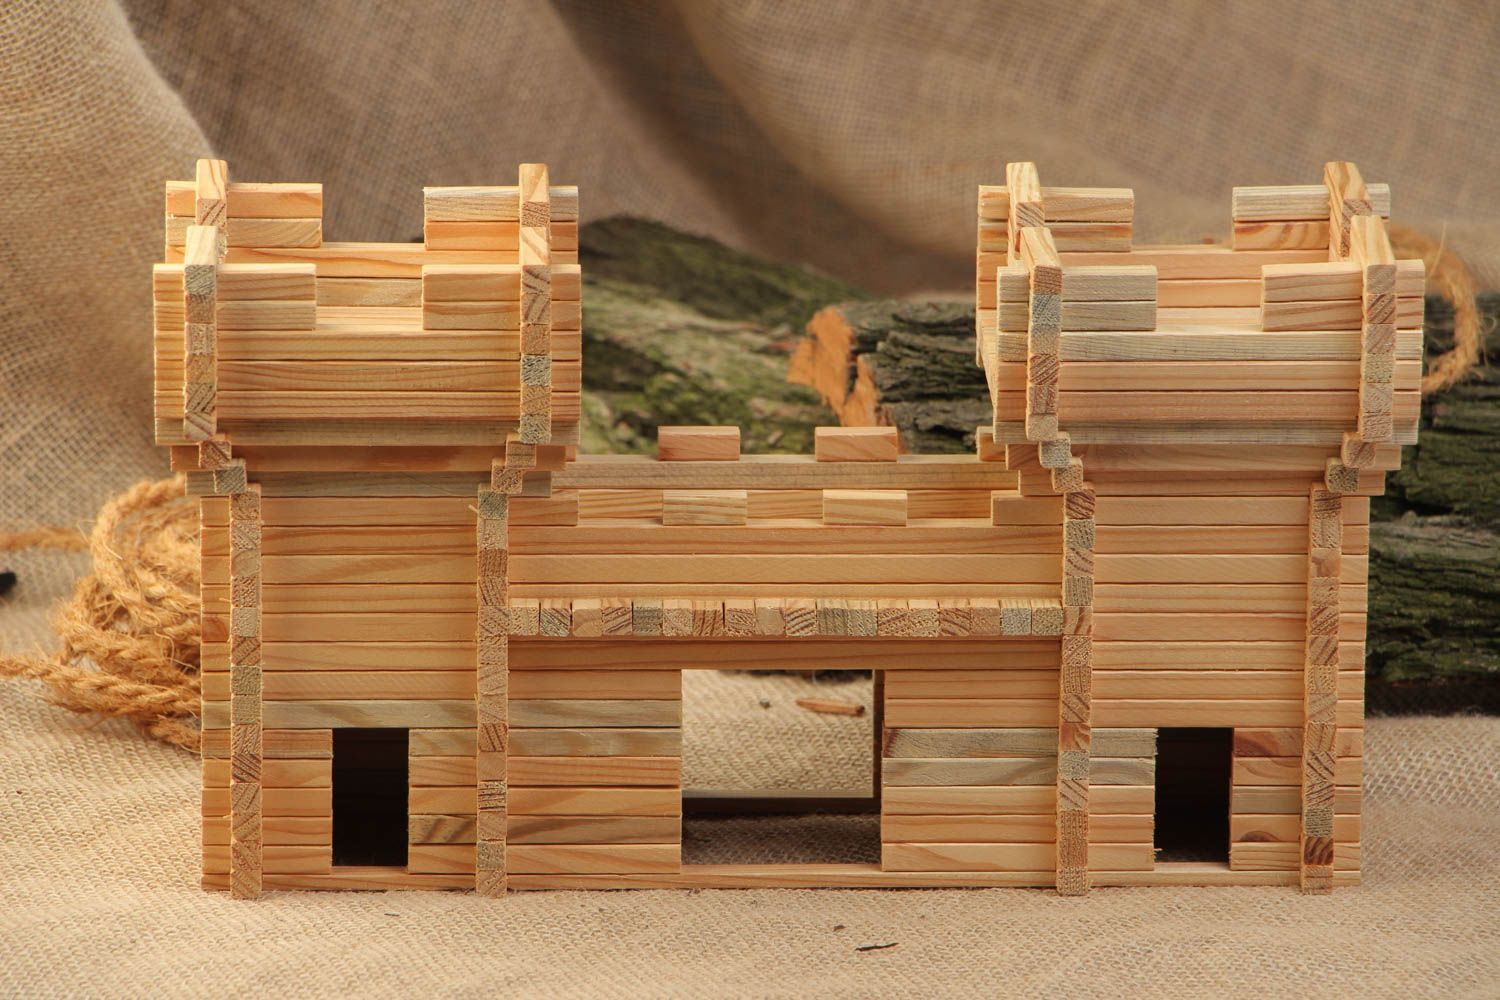 Mecano de madera fortaleza de 236 detalles juguete de desarrollo artesanal  foto 1